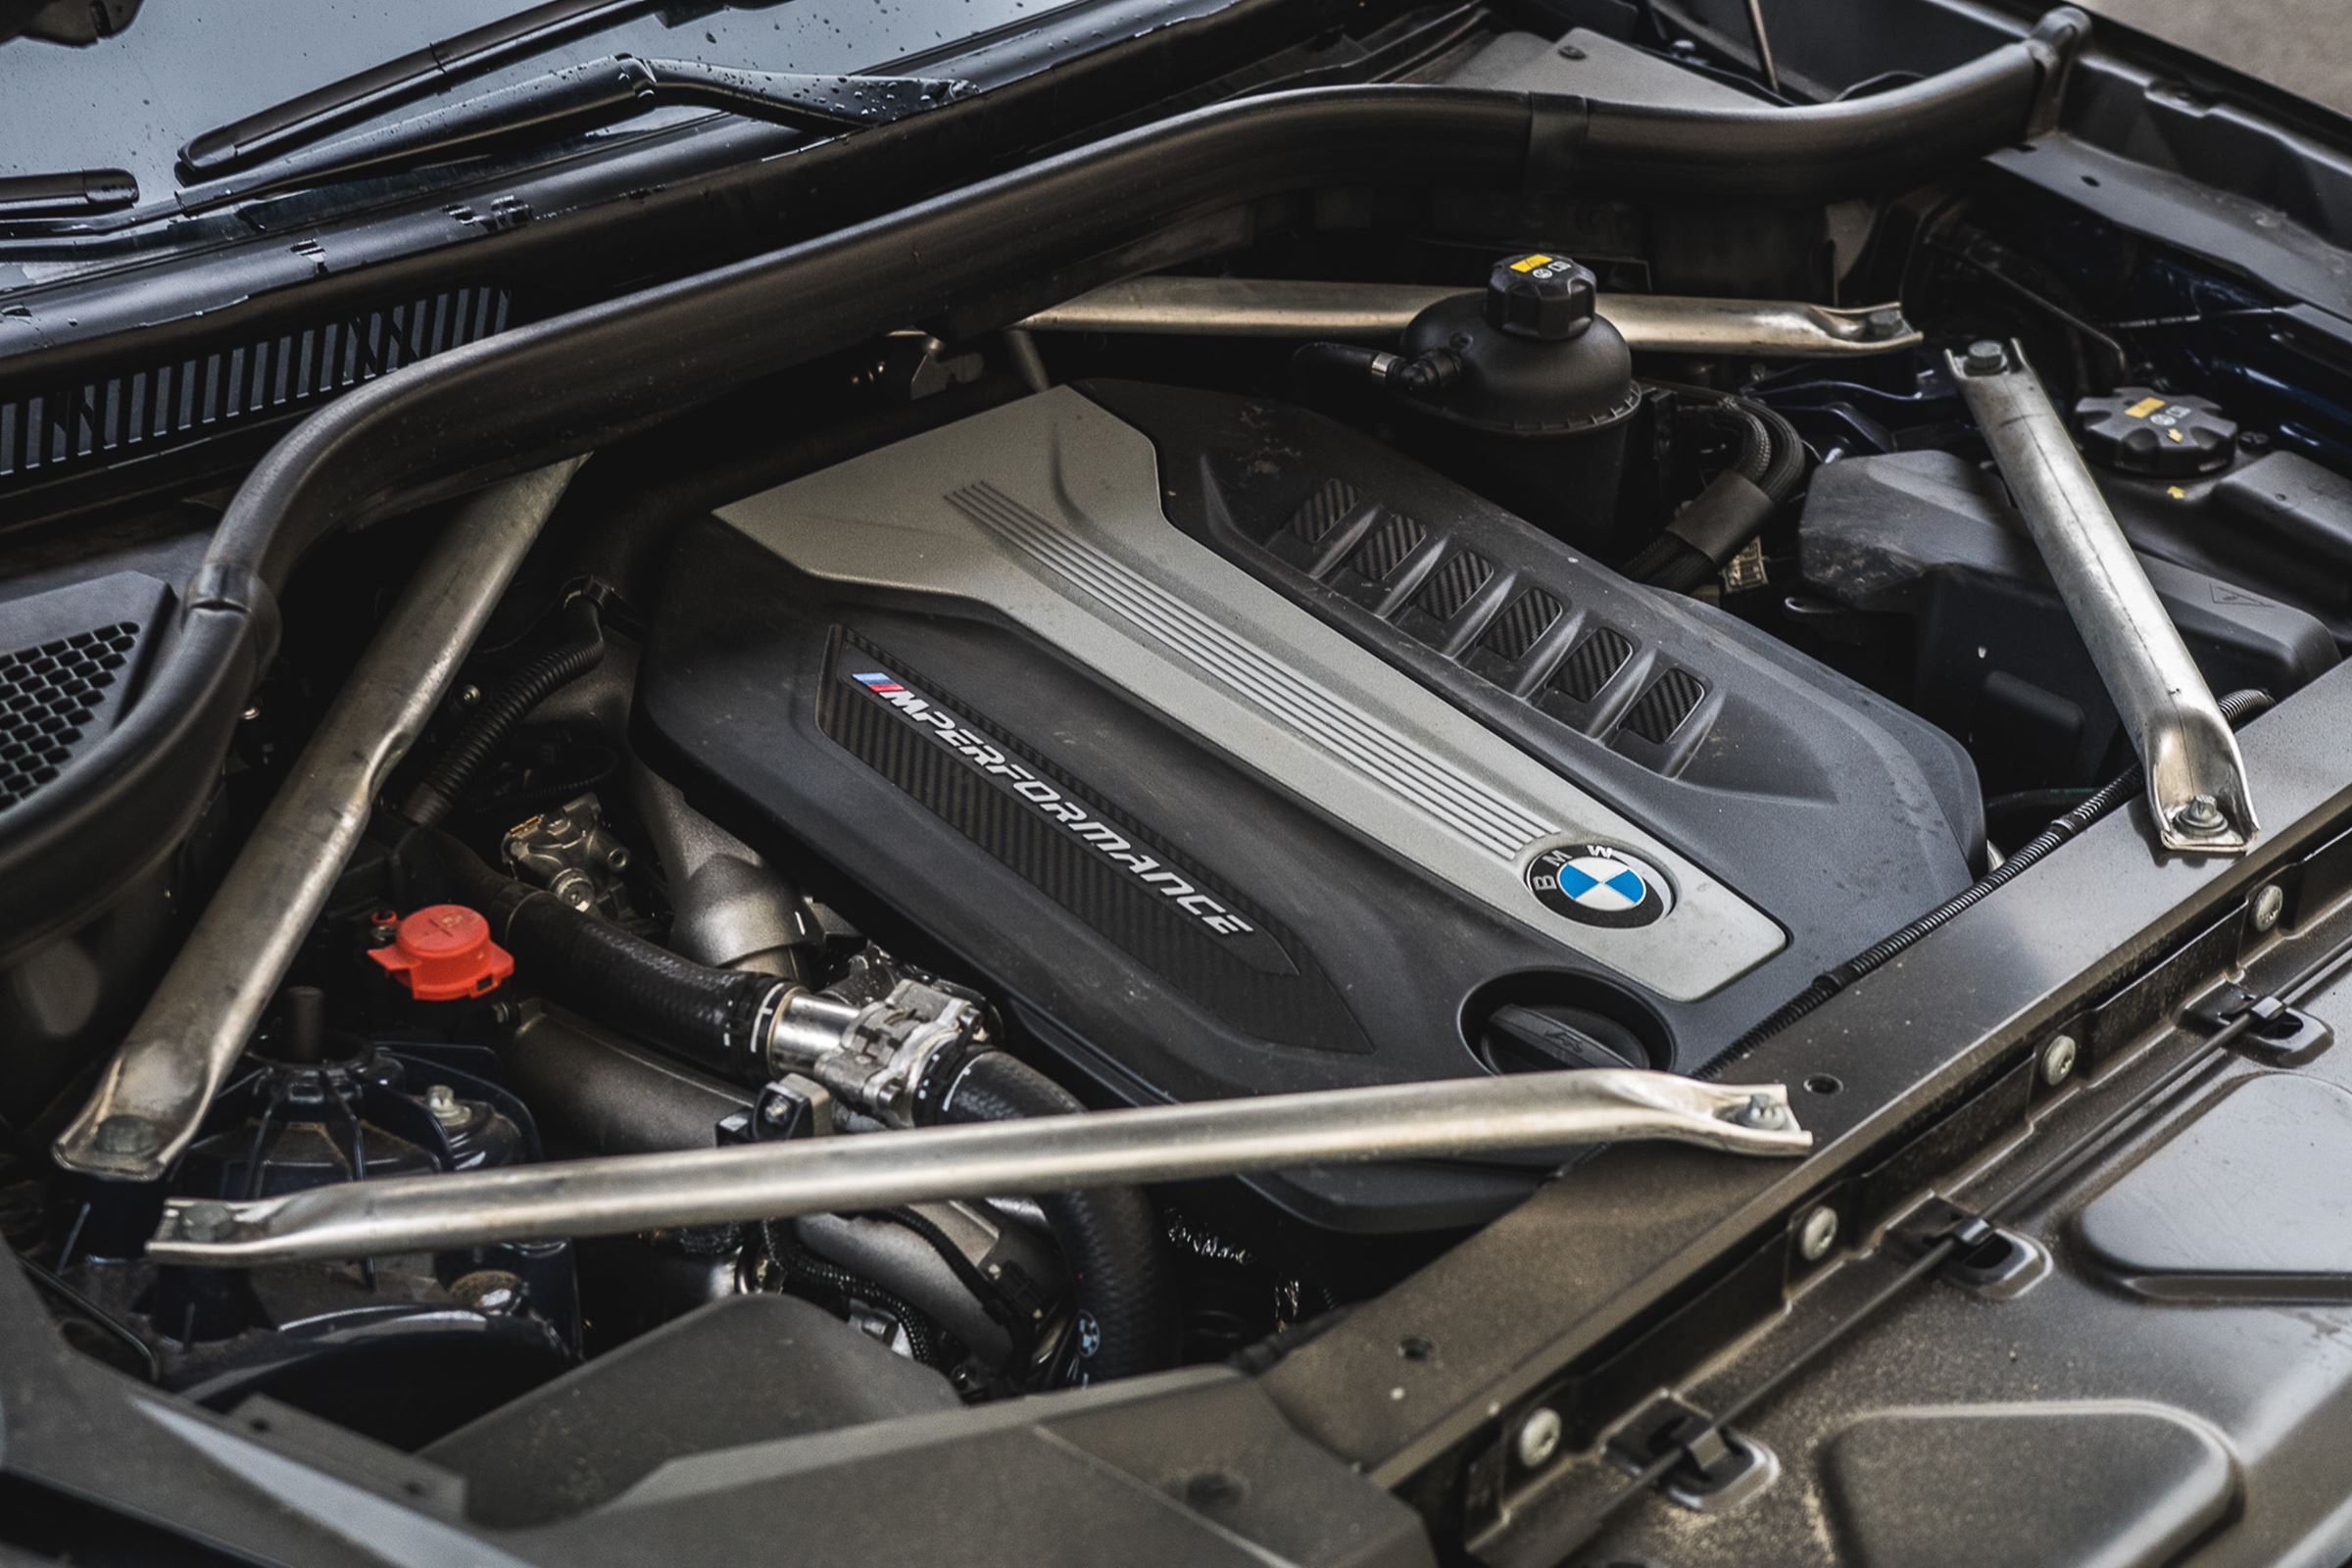 BMW X5 M50d 2019 test